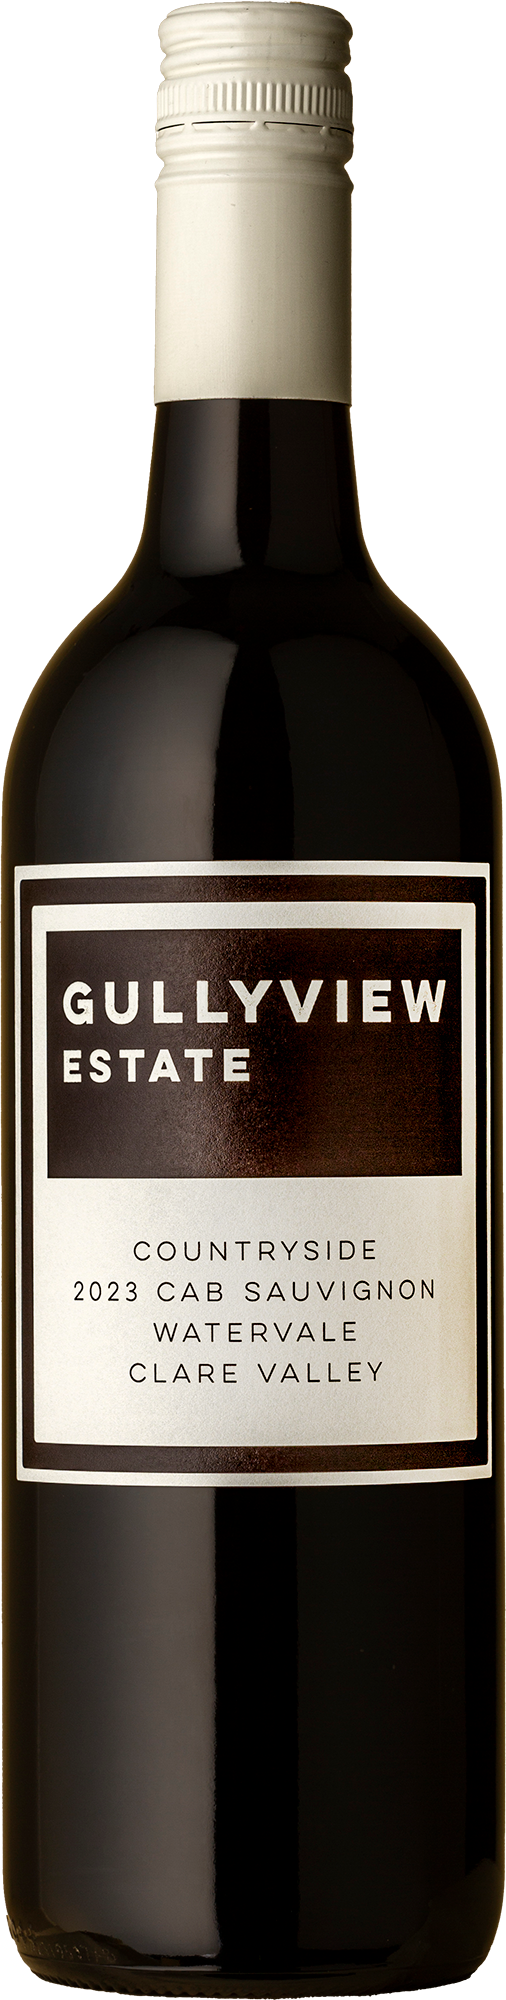 Gullyview Estate - Countryside Cabernet Sauvignon 2023 Red Wine